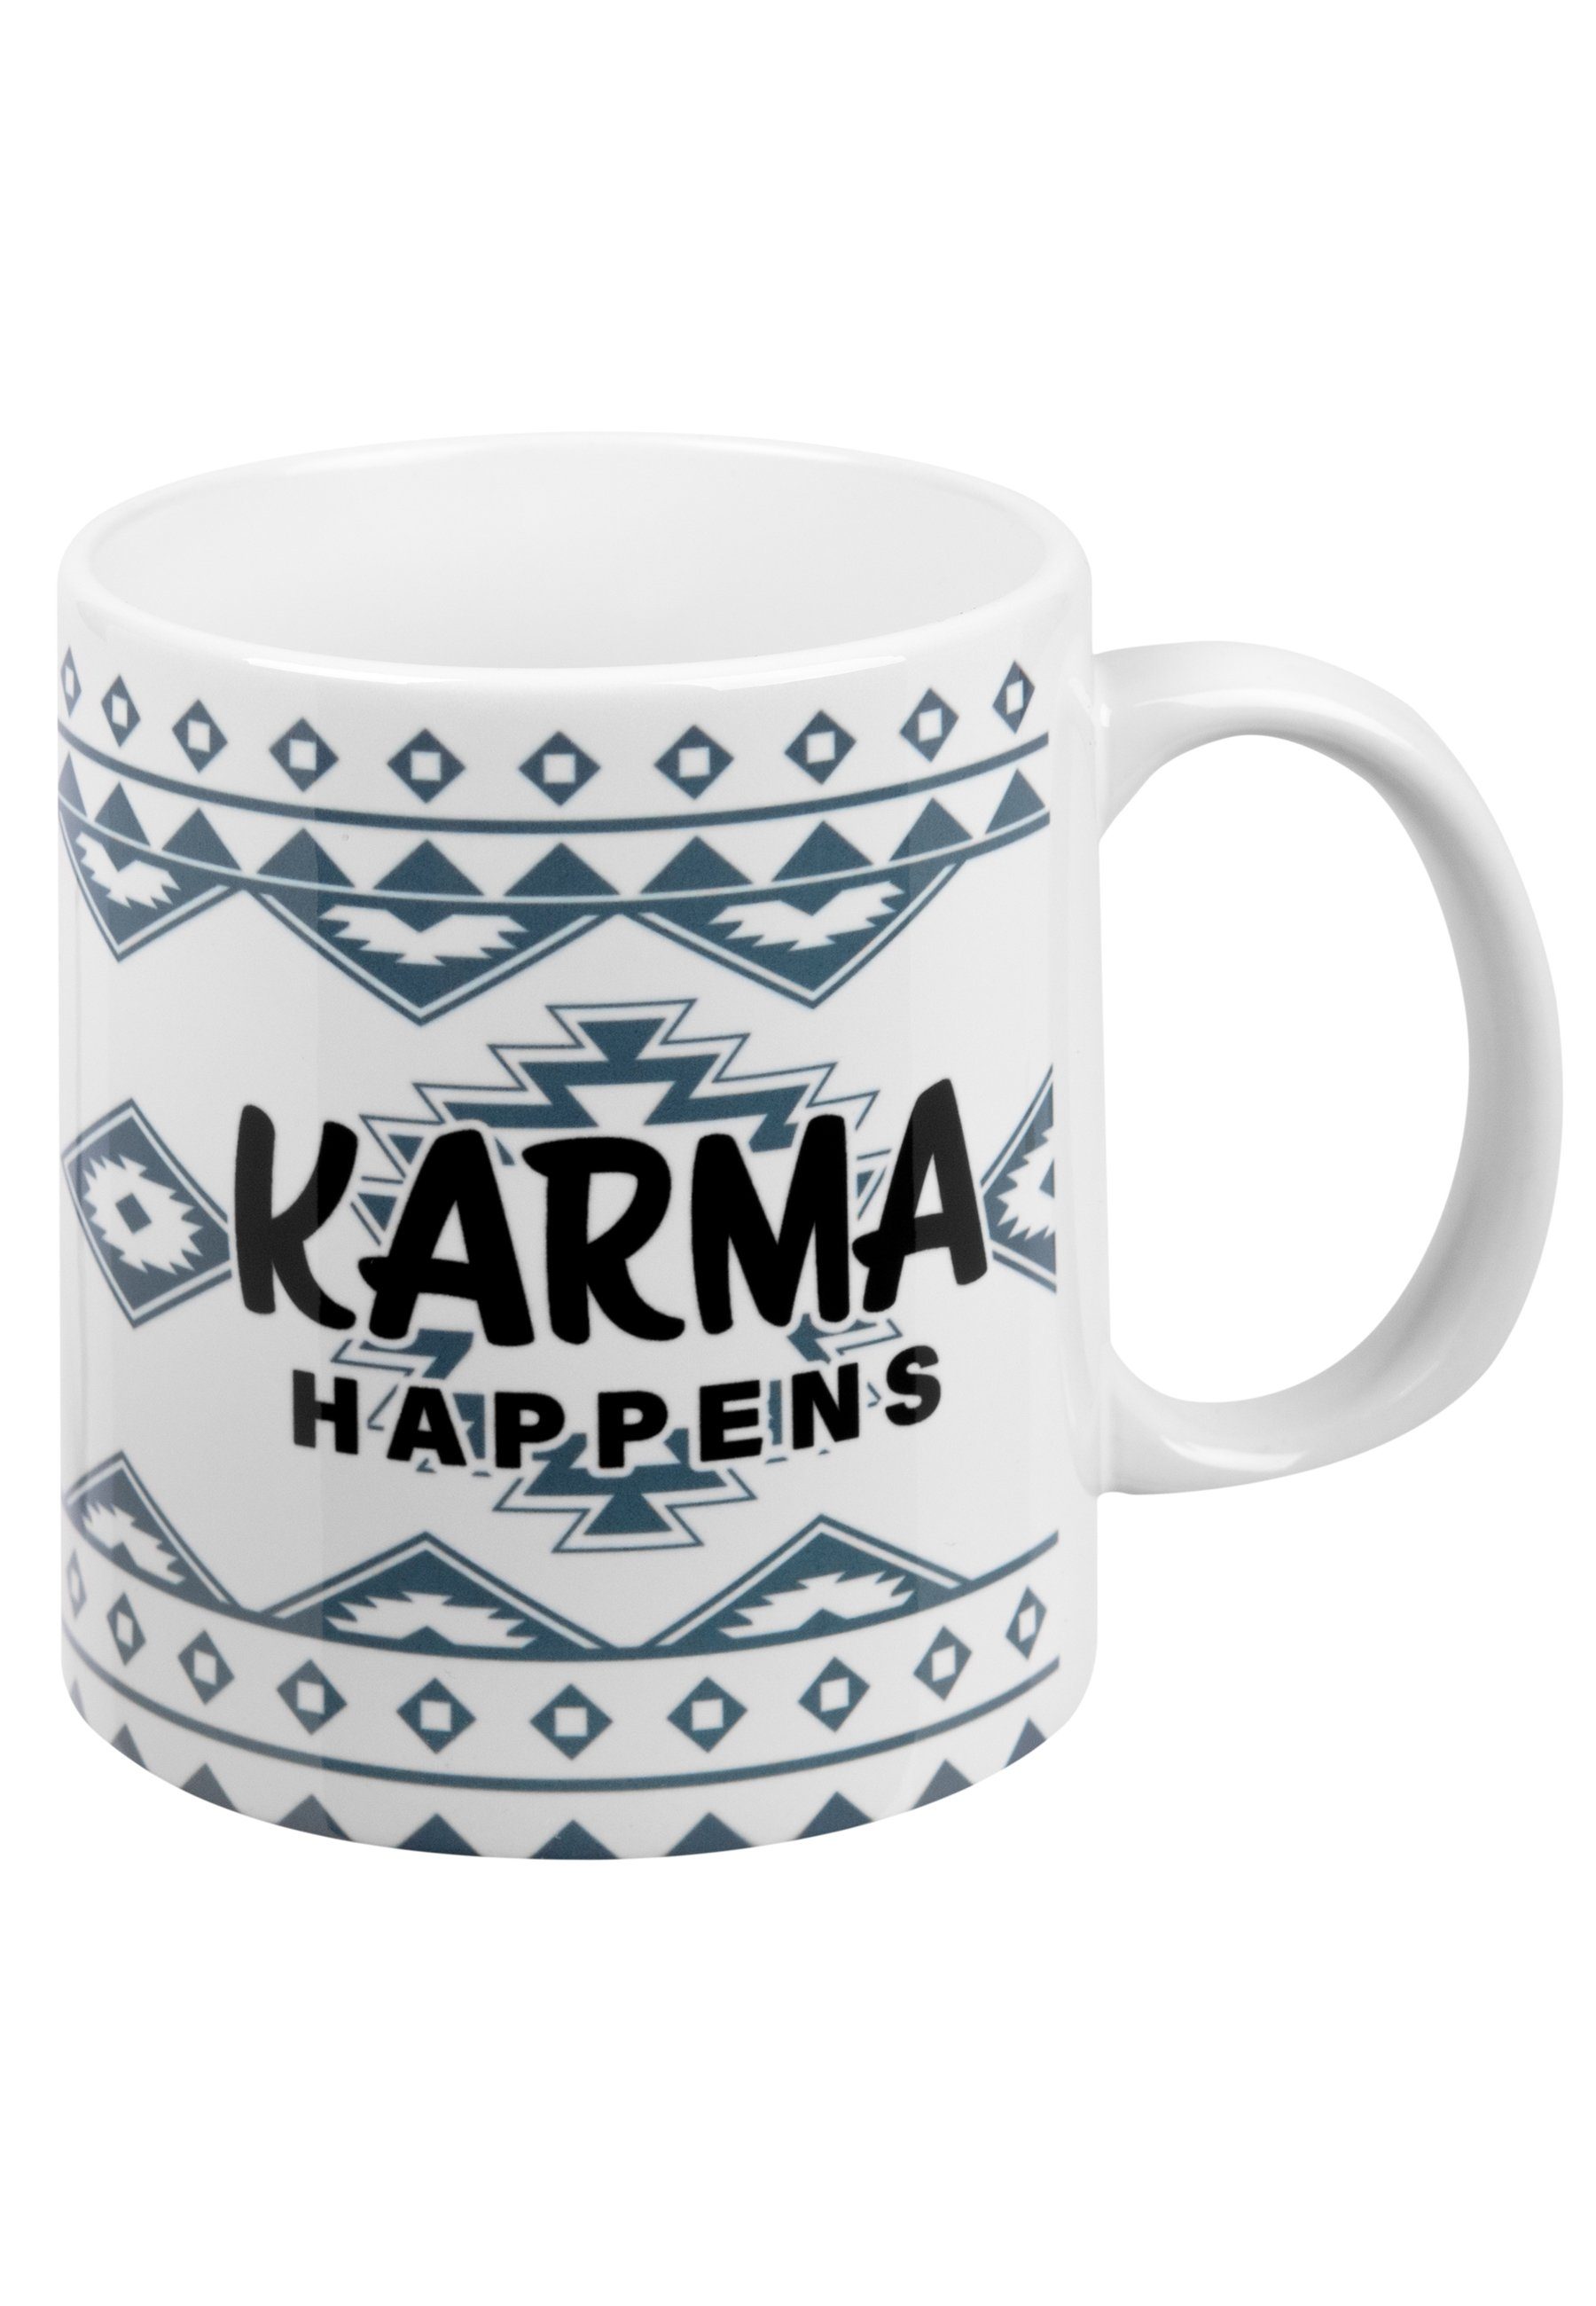 Labels® Karma Tasse happens Tasse Becher Kaffeetasse Keramik Weiß Keramik - 320ml, Karma United